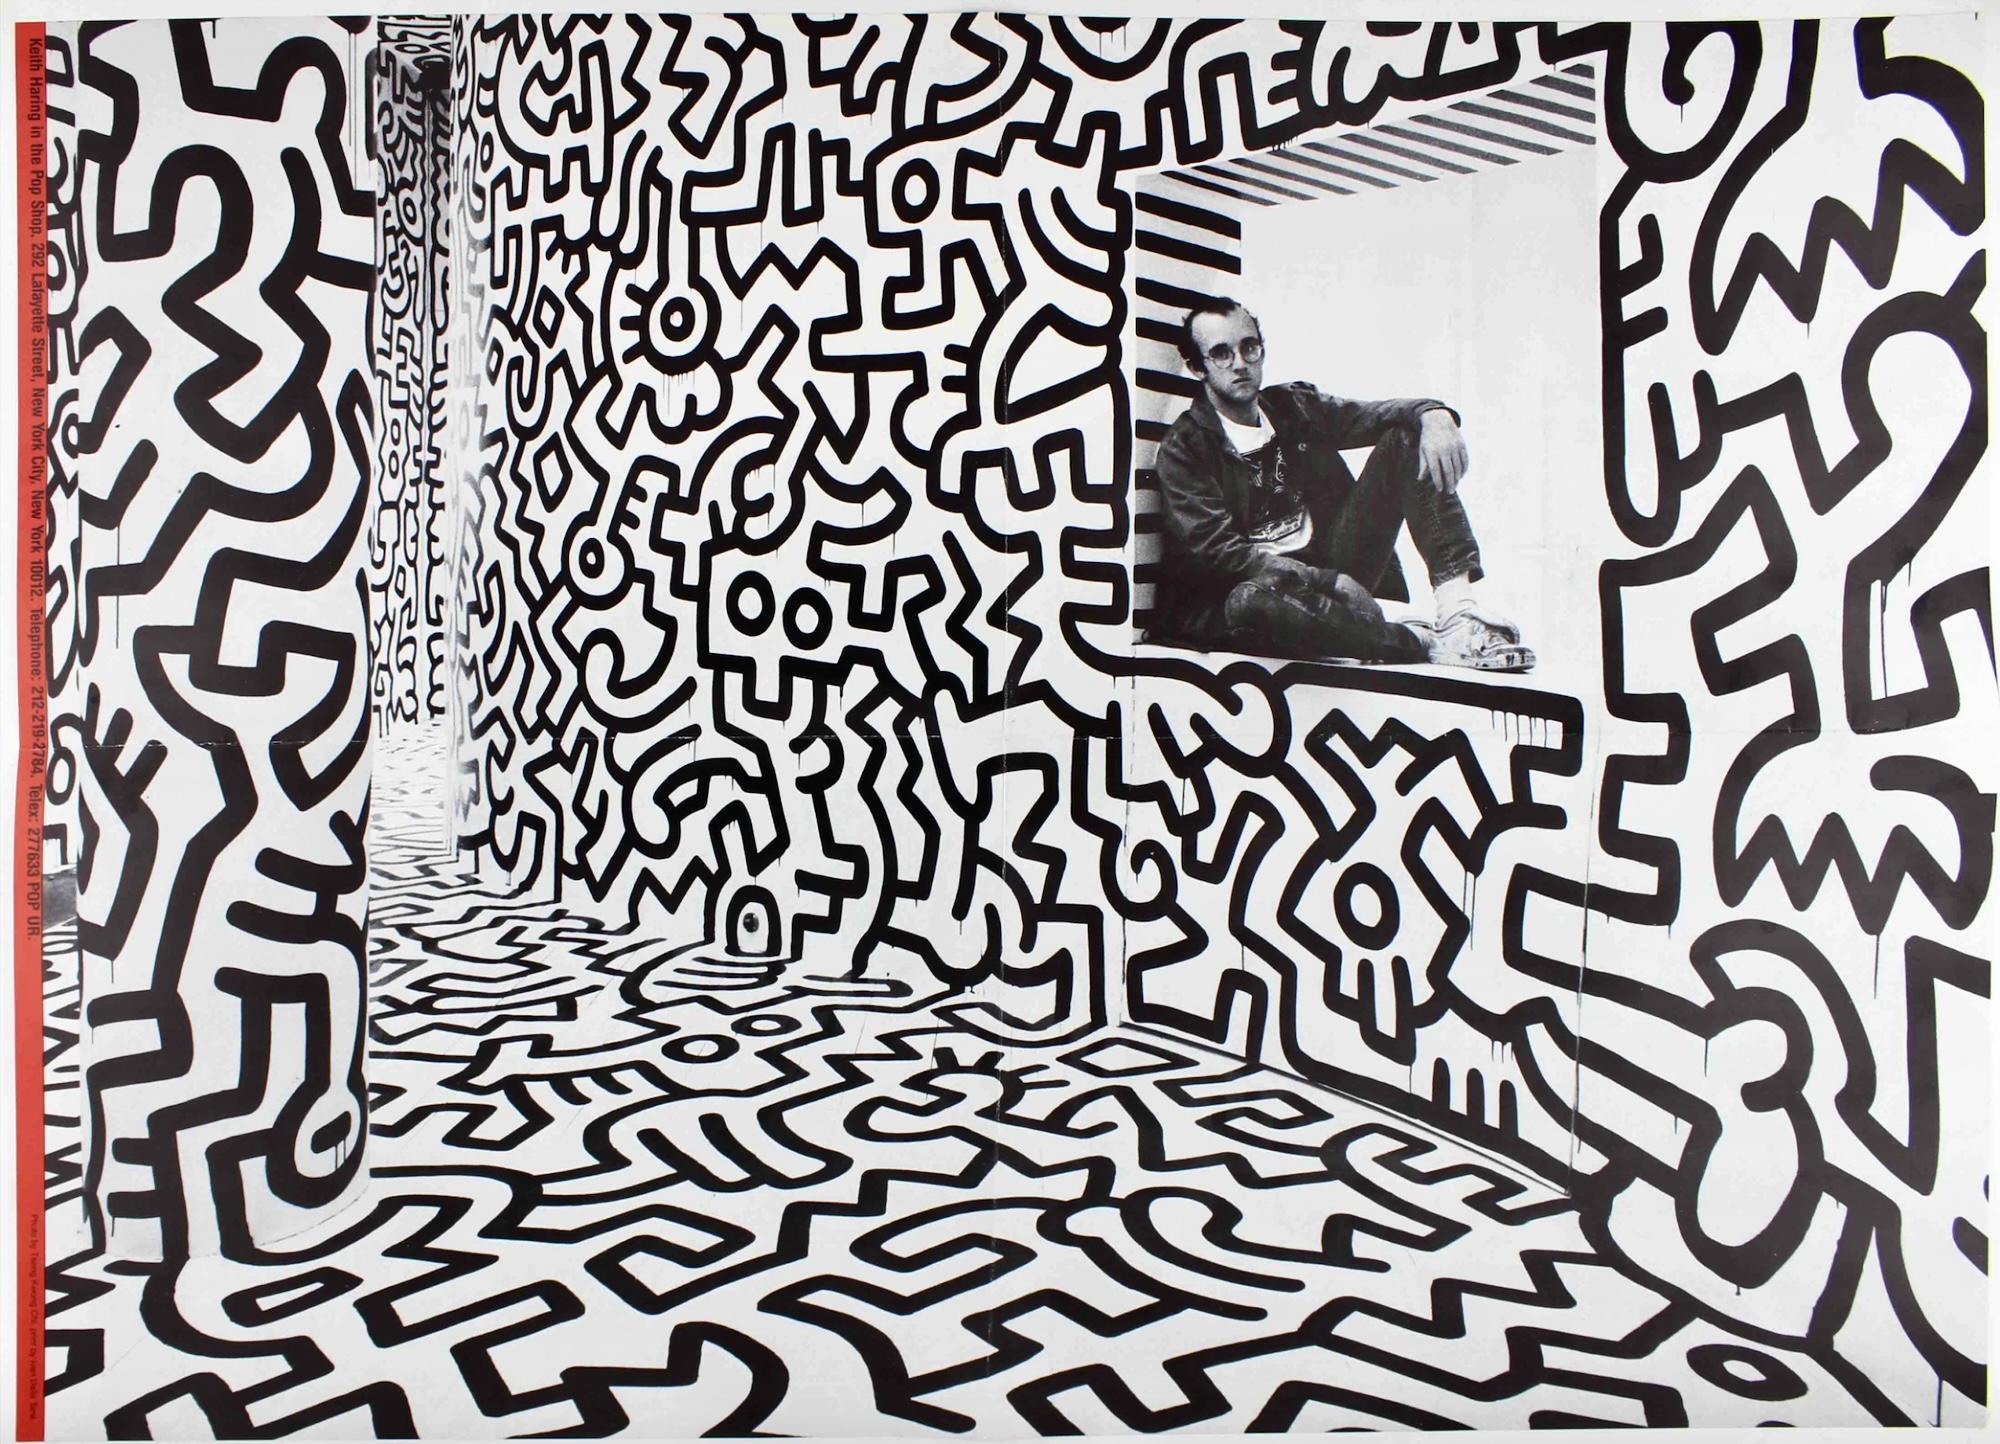 Keith Haring Pop Shop poster (vintage Keith Haring posters) - Print by (after) Keith Haring